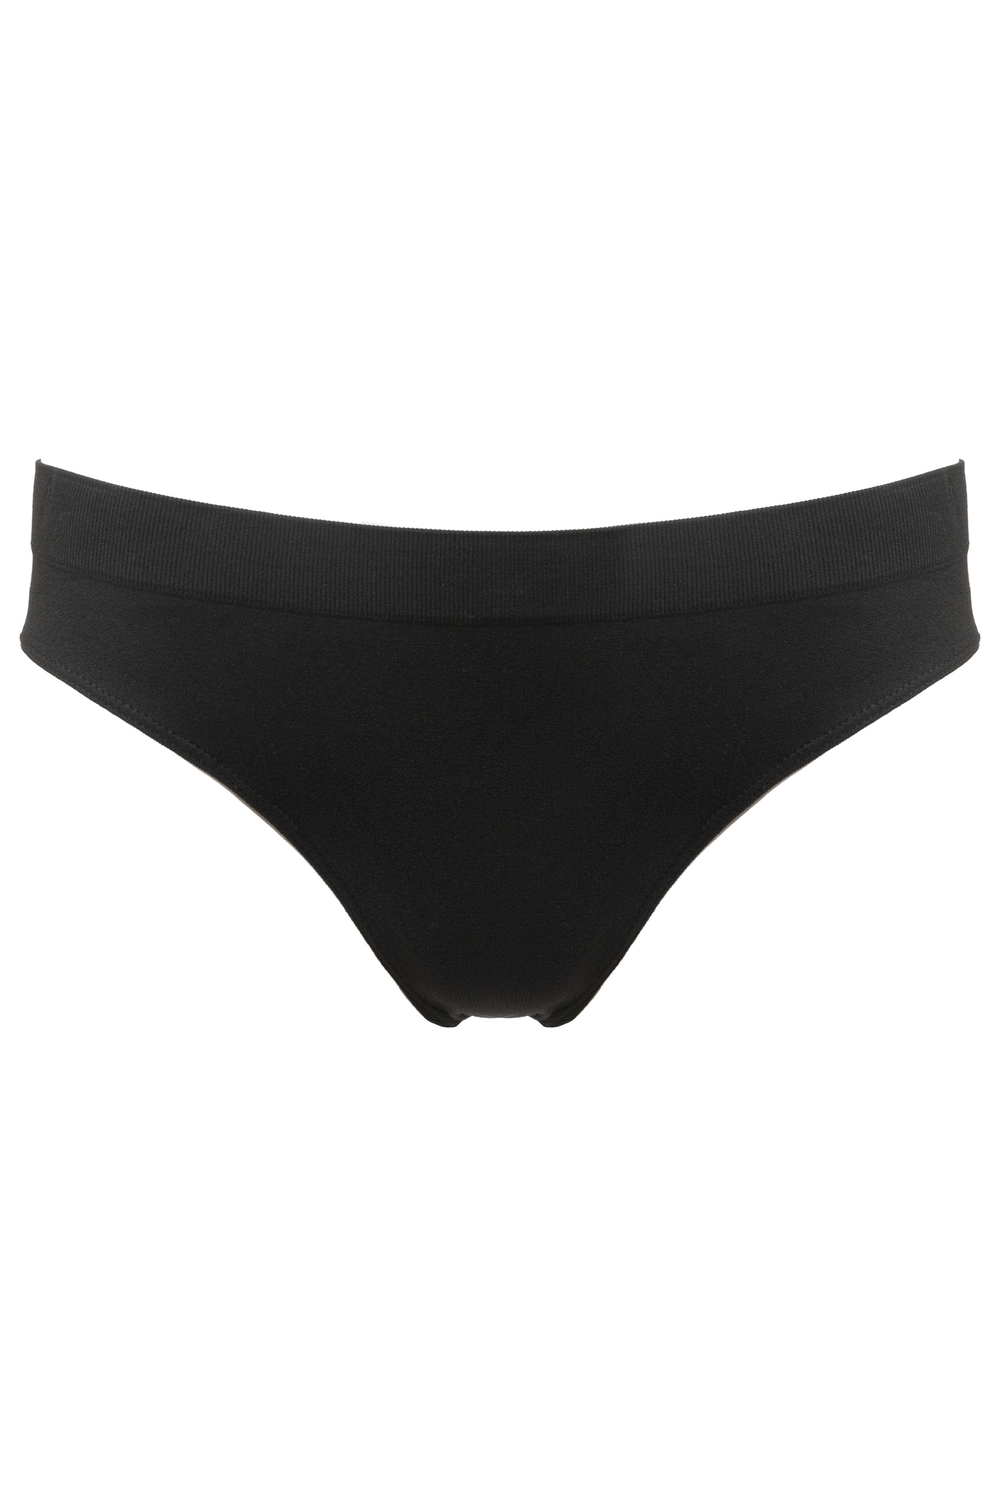 Set of 3 seamless high-cut panties - Charcoal, pink & black. Size